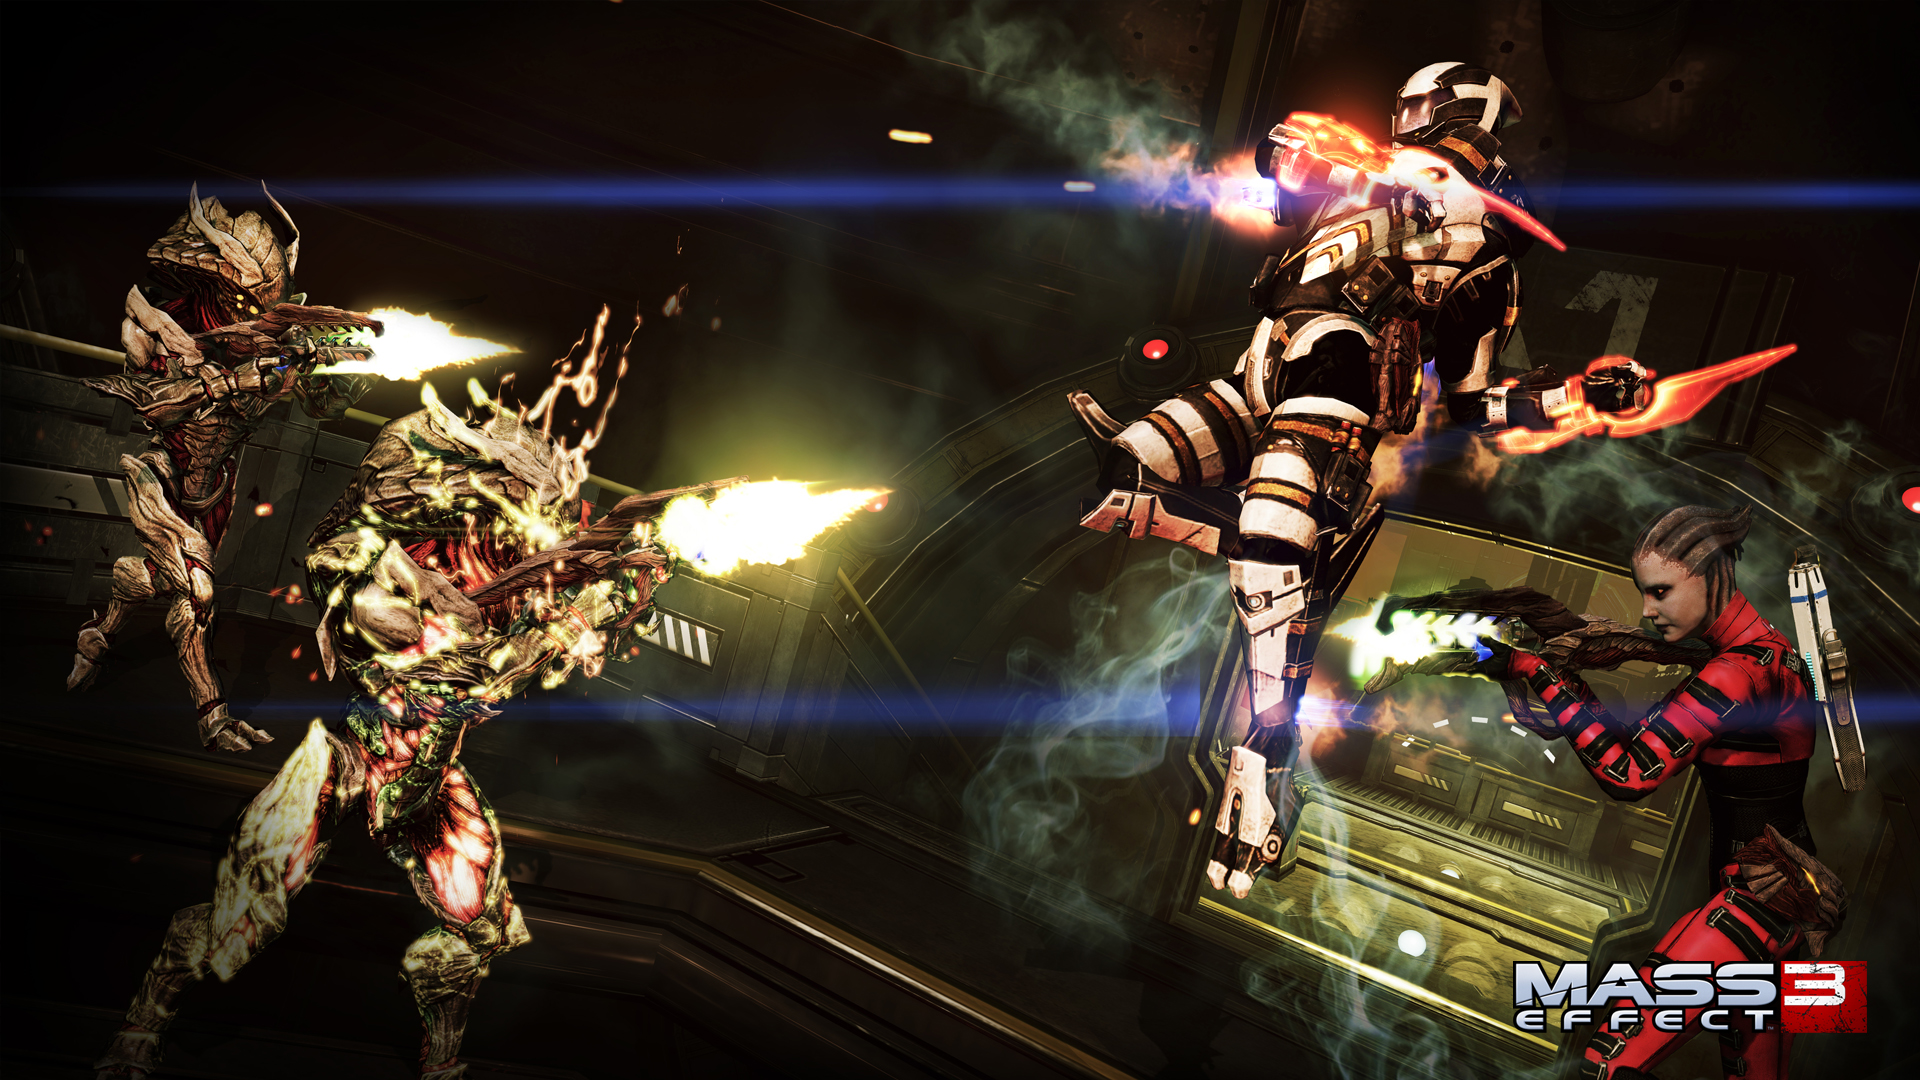 Mass Effect 3: Retaliation Multiplayer DLC – BioWare Blog1920 x 1080